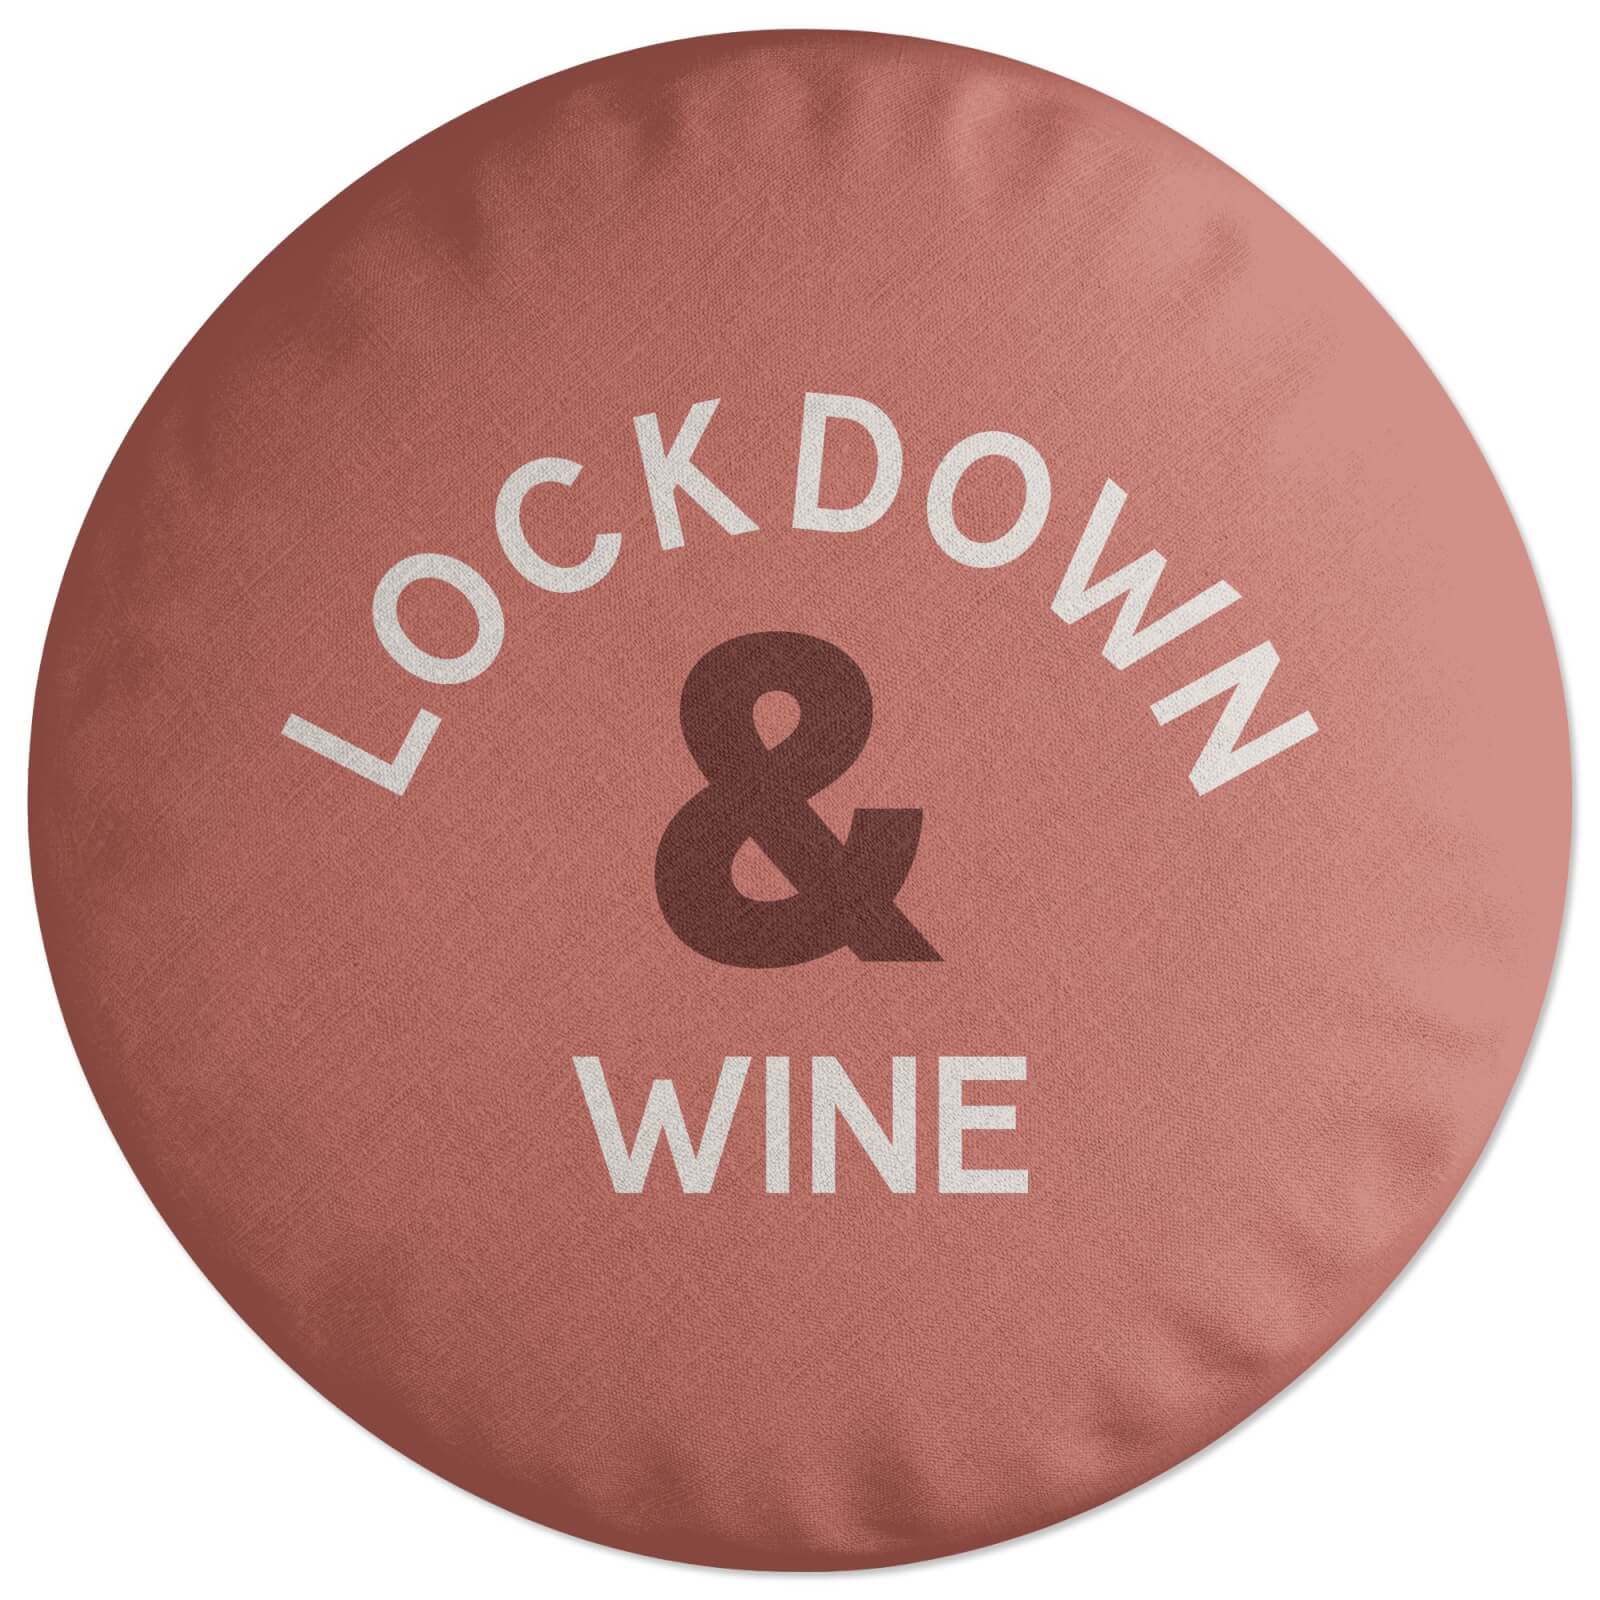 Lockdown & WIne Round Cushion